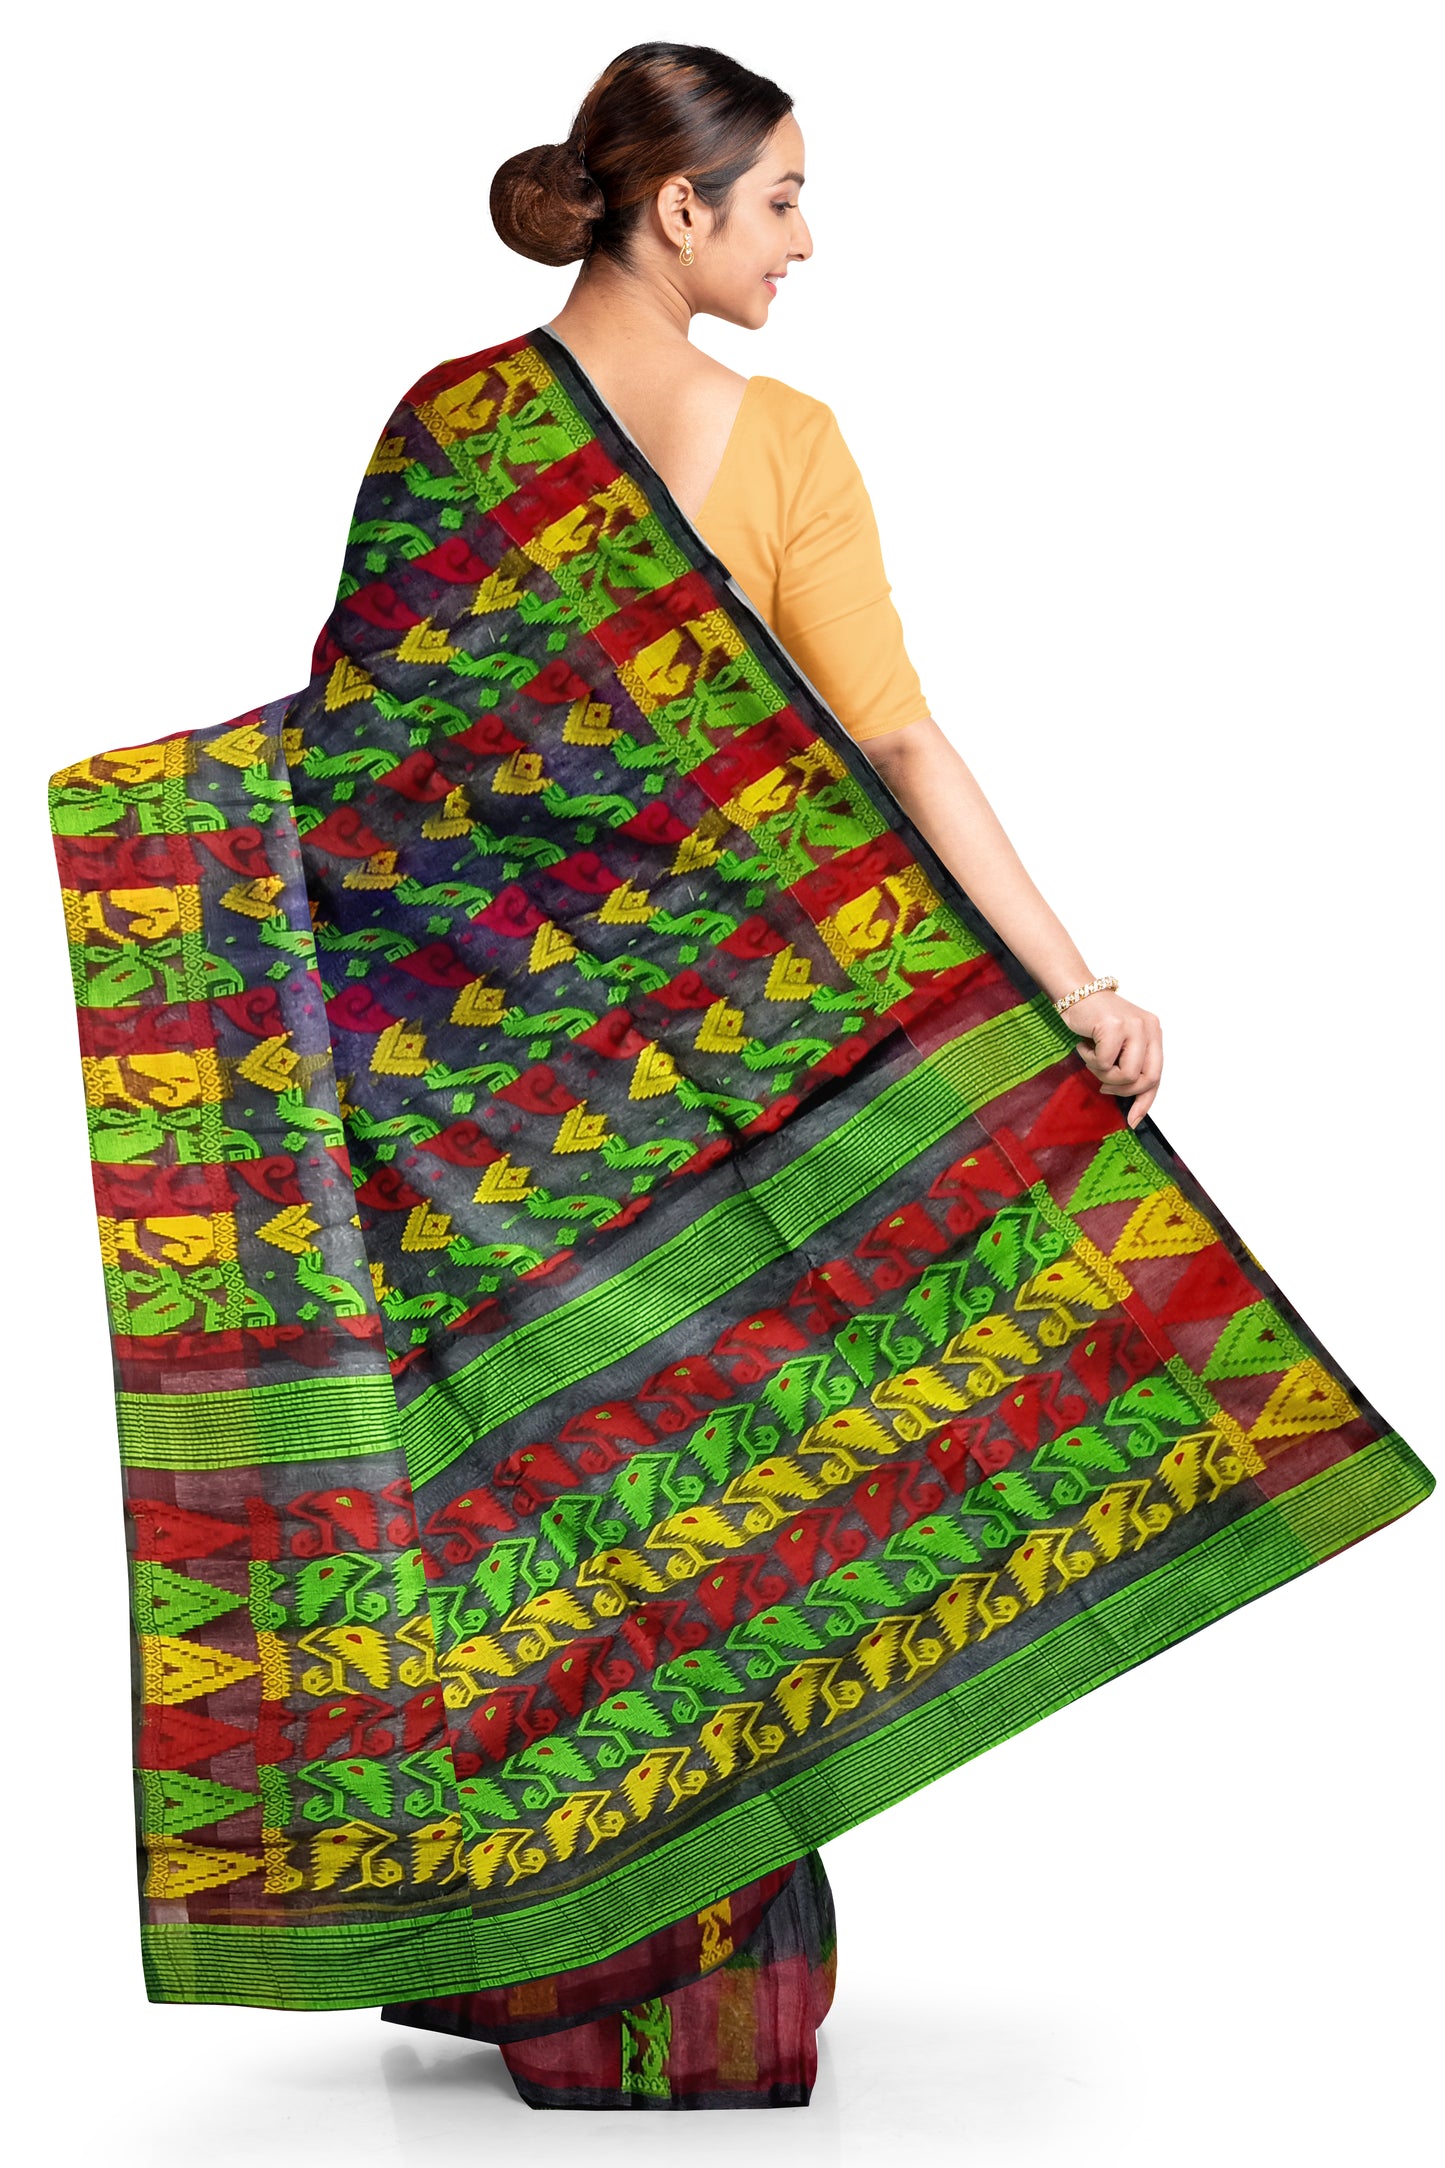 Pradip Fabrics Ethnic Women's Tant Jamdani Black Color Saree